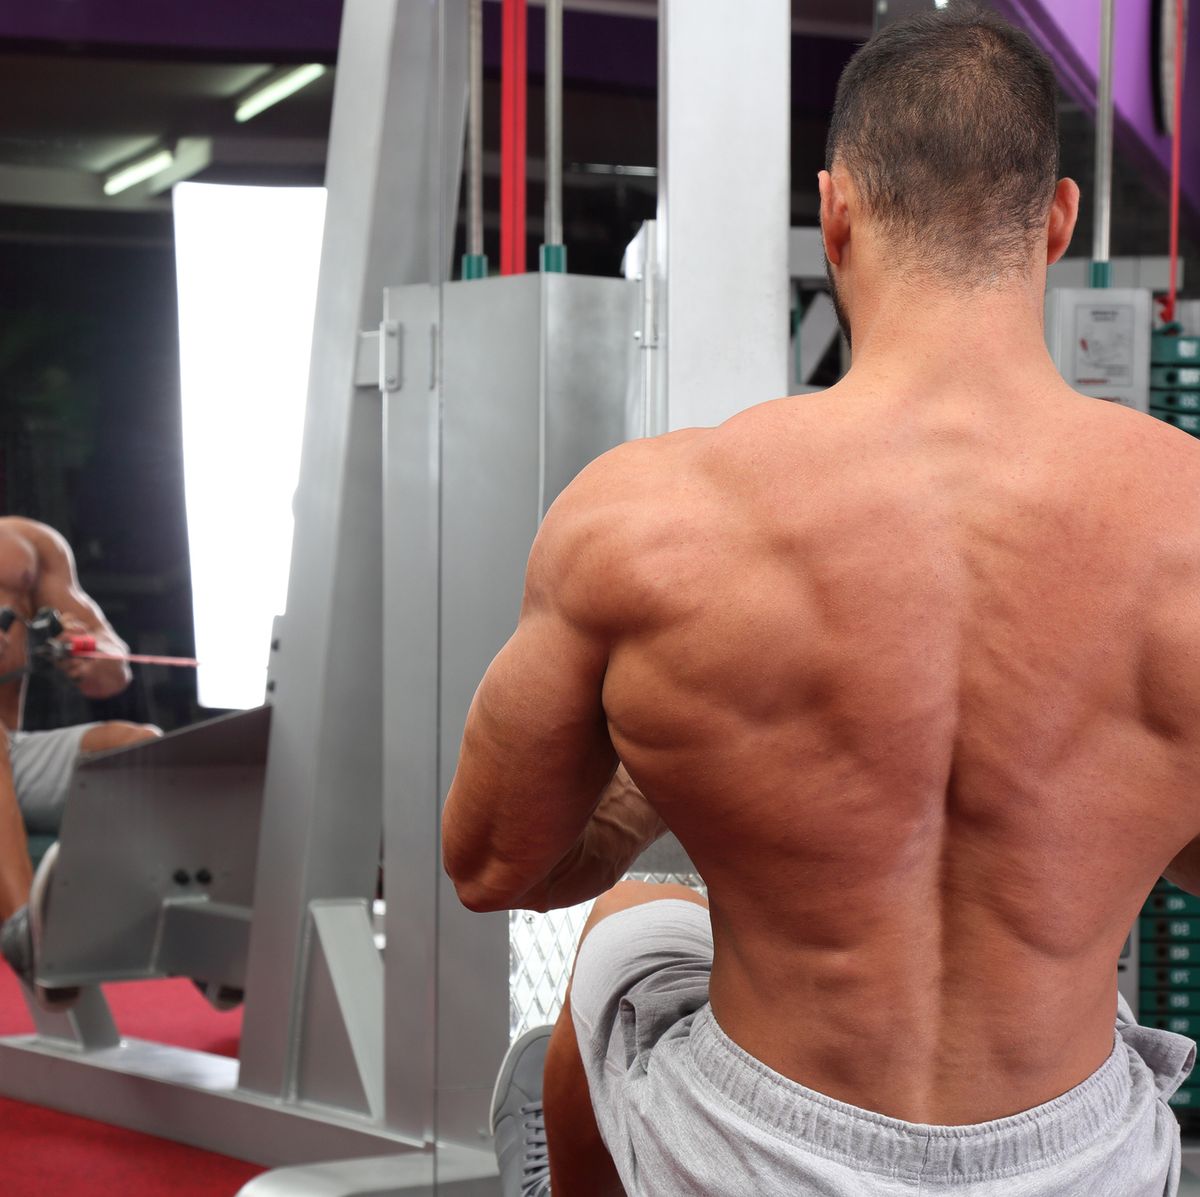 Back Workout to Build a Lean, Sculpted, V-shaped Back